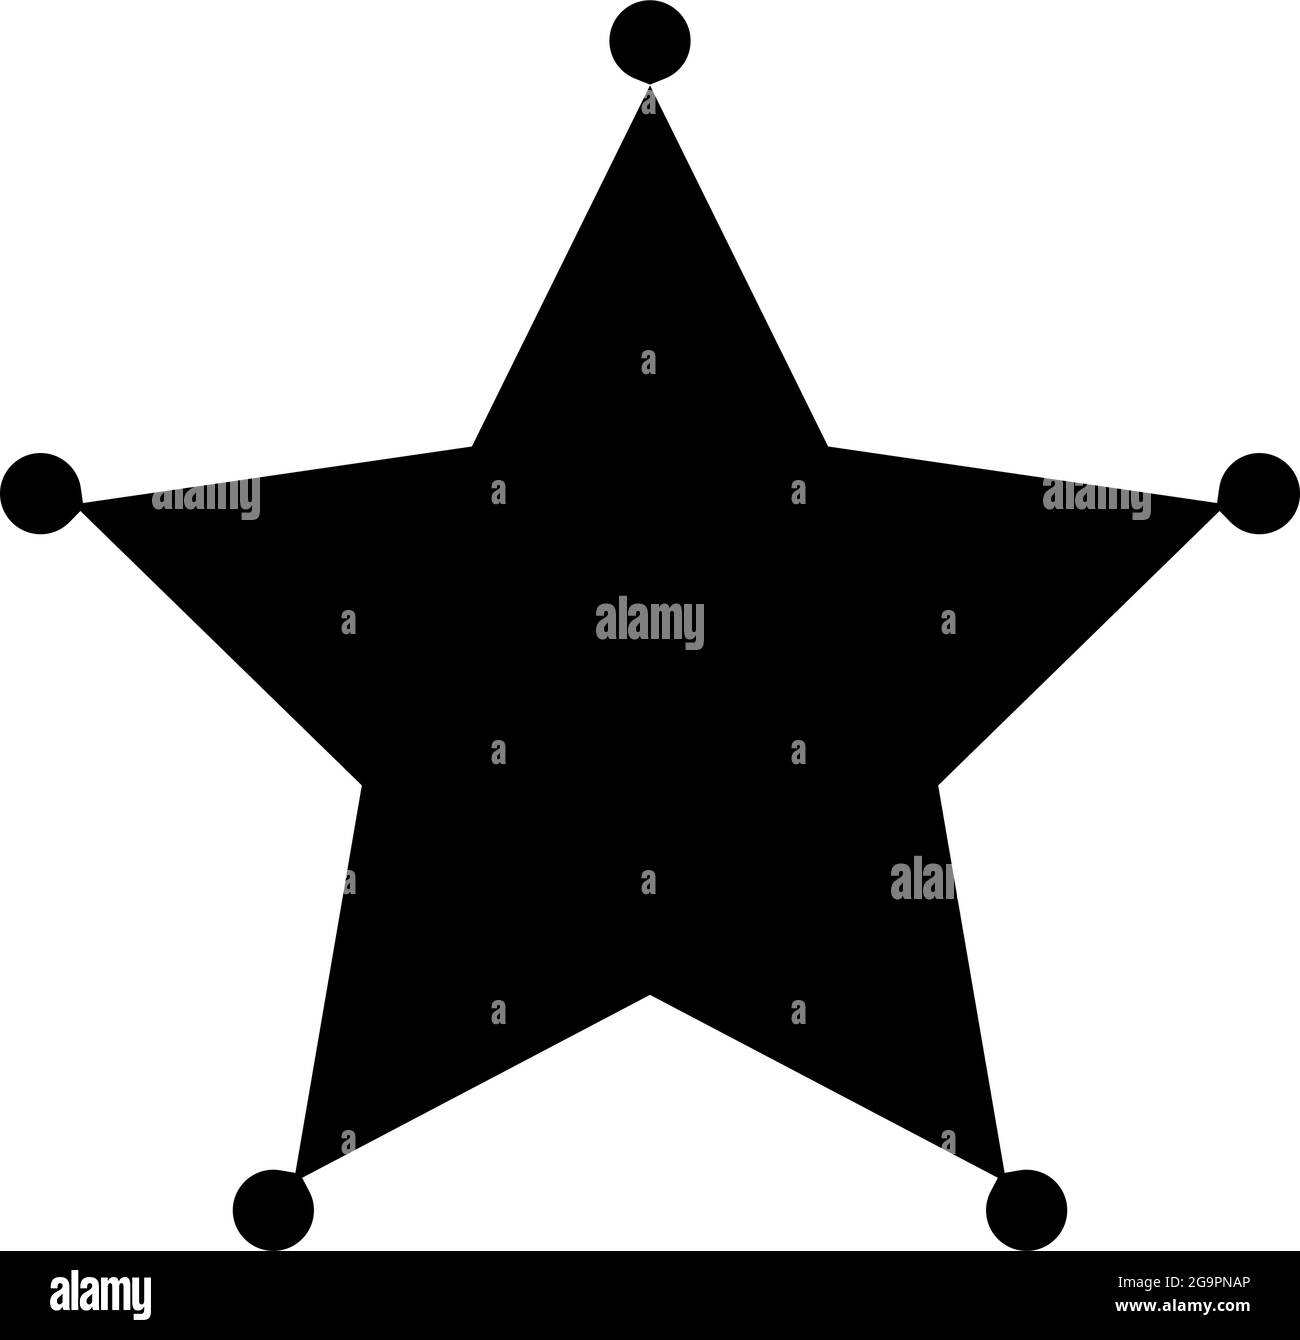 Sheriff's badge, star icon, design element. Deputy, police bade – stock vector illustration, clip-art graphics Stock Vector